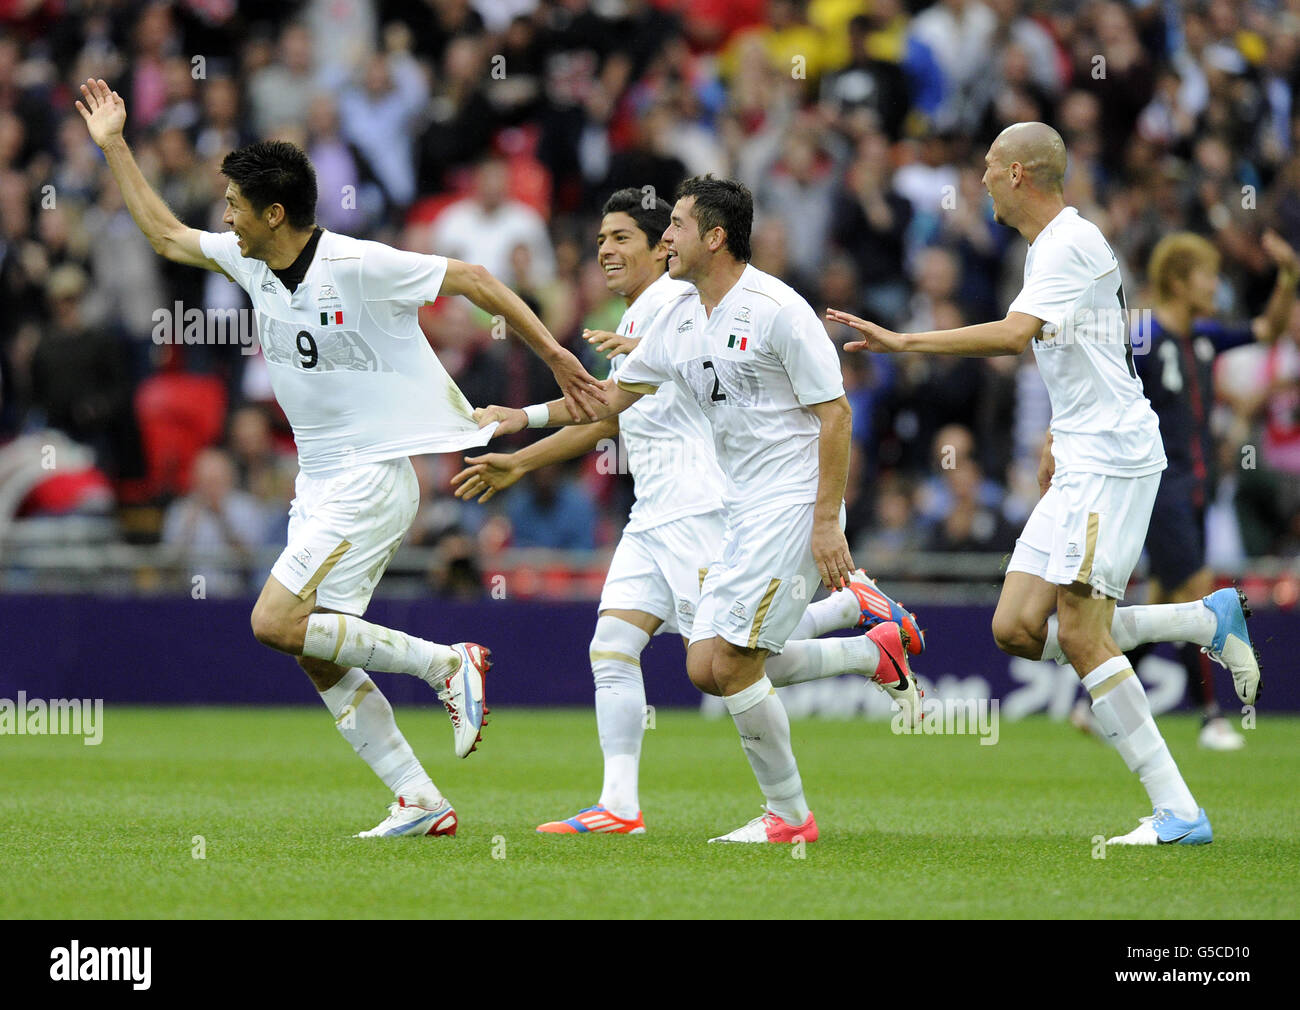 Mexico's Oribe Peralta (left) celebrates scoring a goal, during the Men's Football Semi-final at Wembley Stadium. Stock Photo